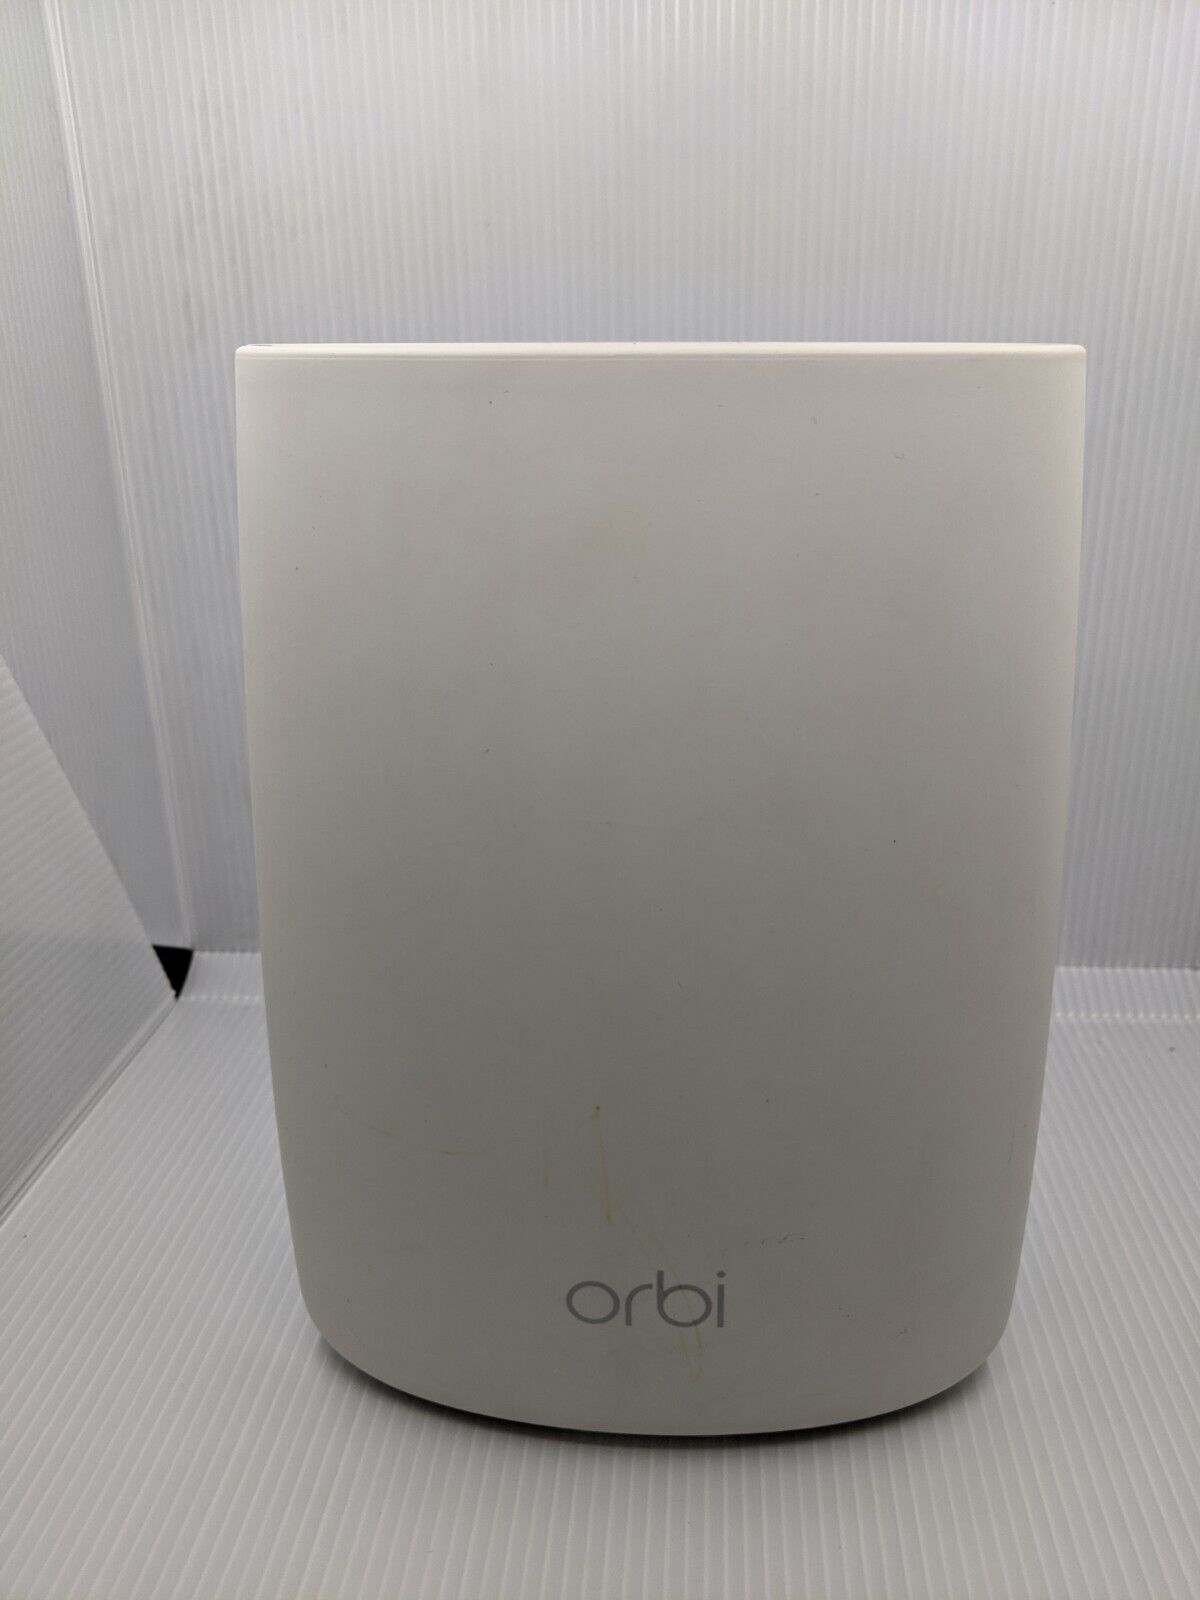 Netgear Orbi  Tri-Band Mesh Wi-Fi Extender